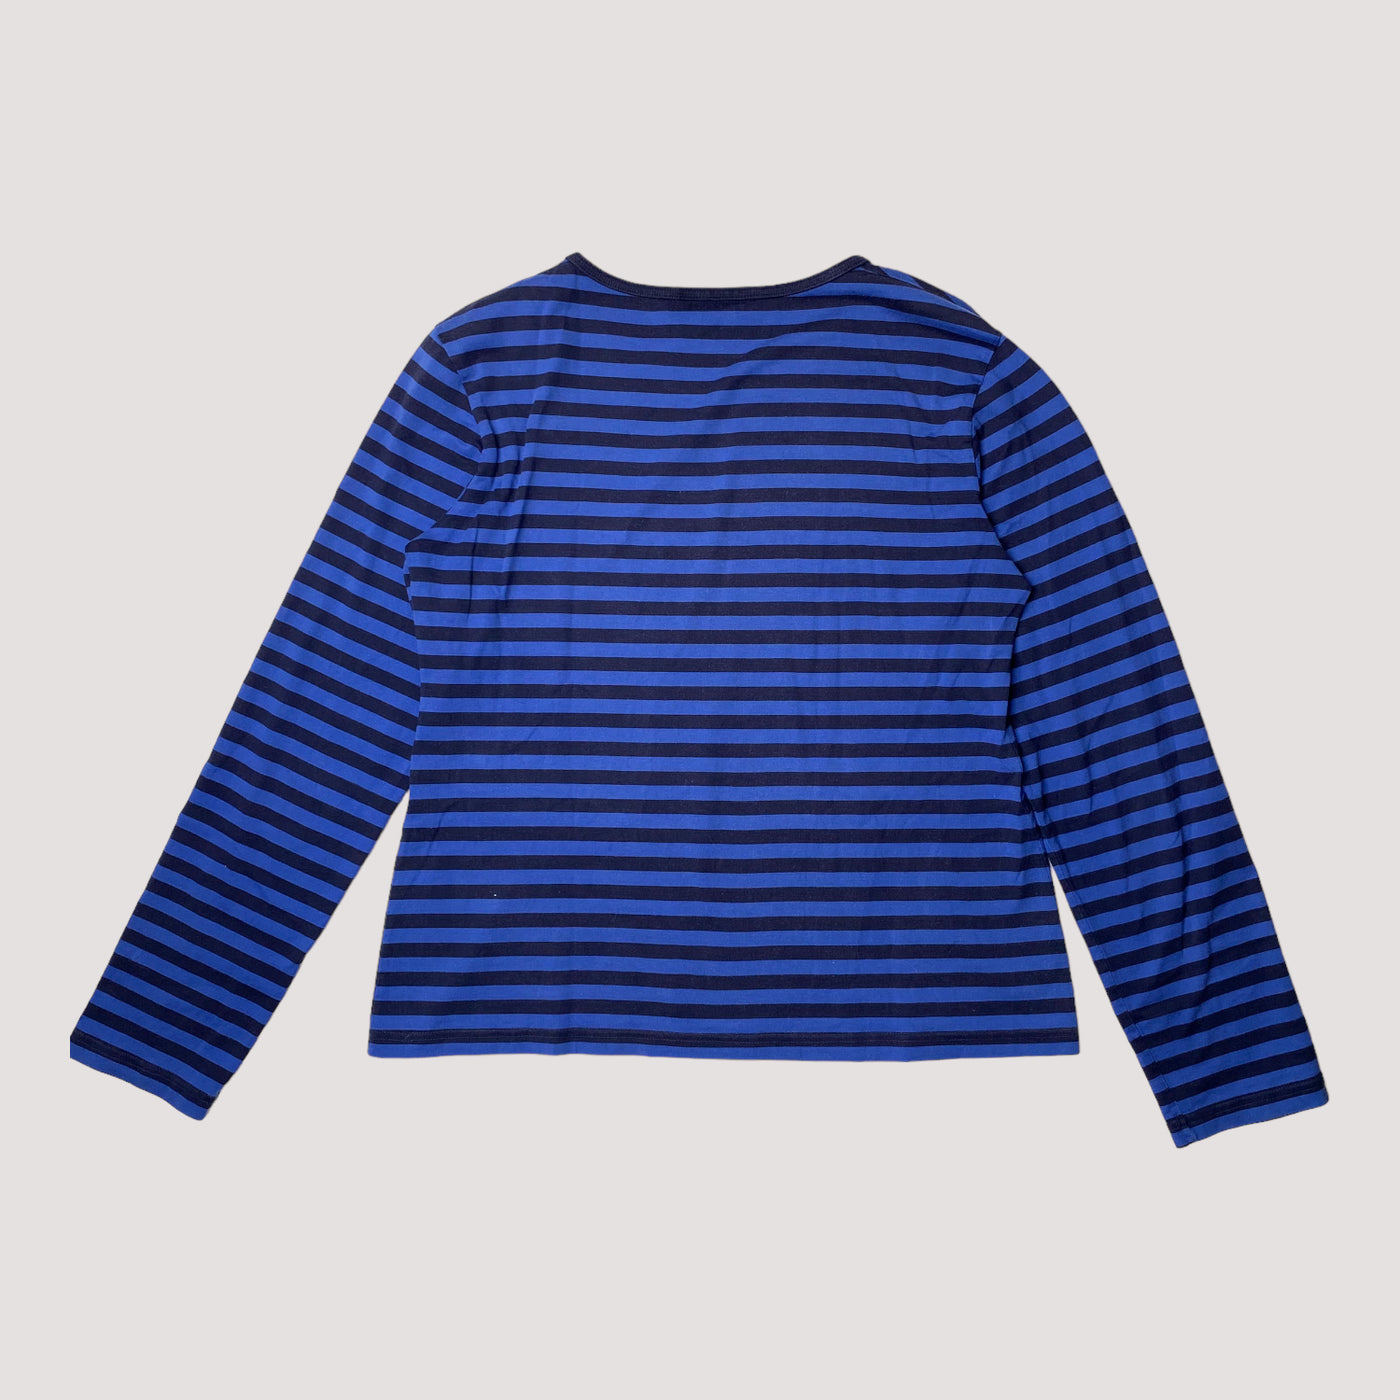 Marimekko shirt, striped | woman XL